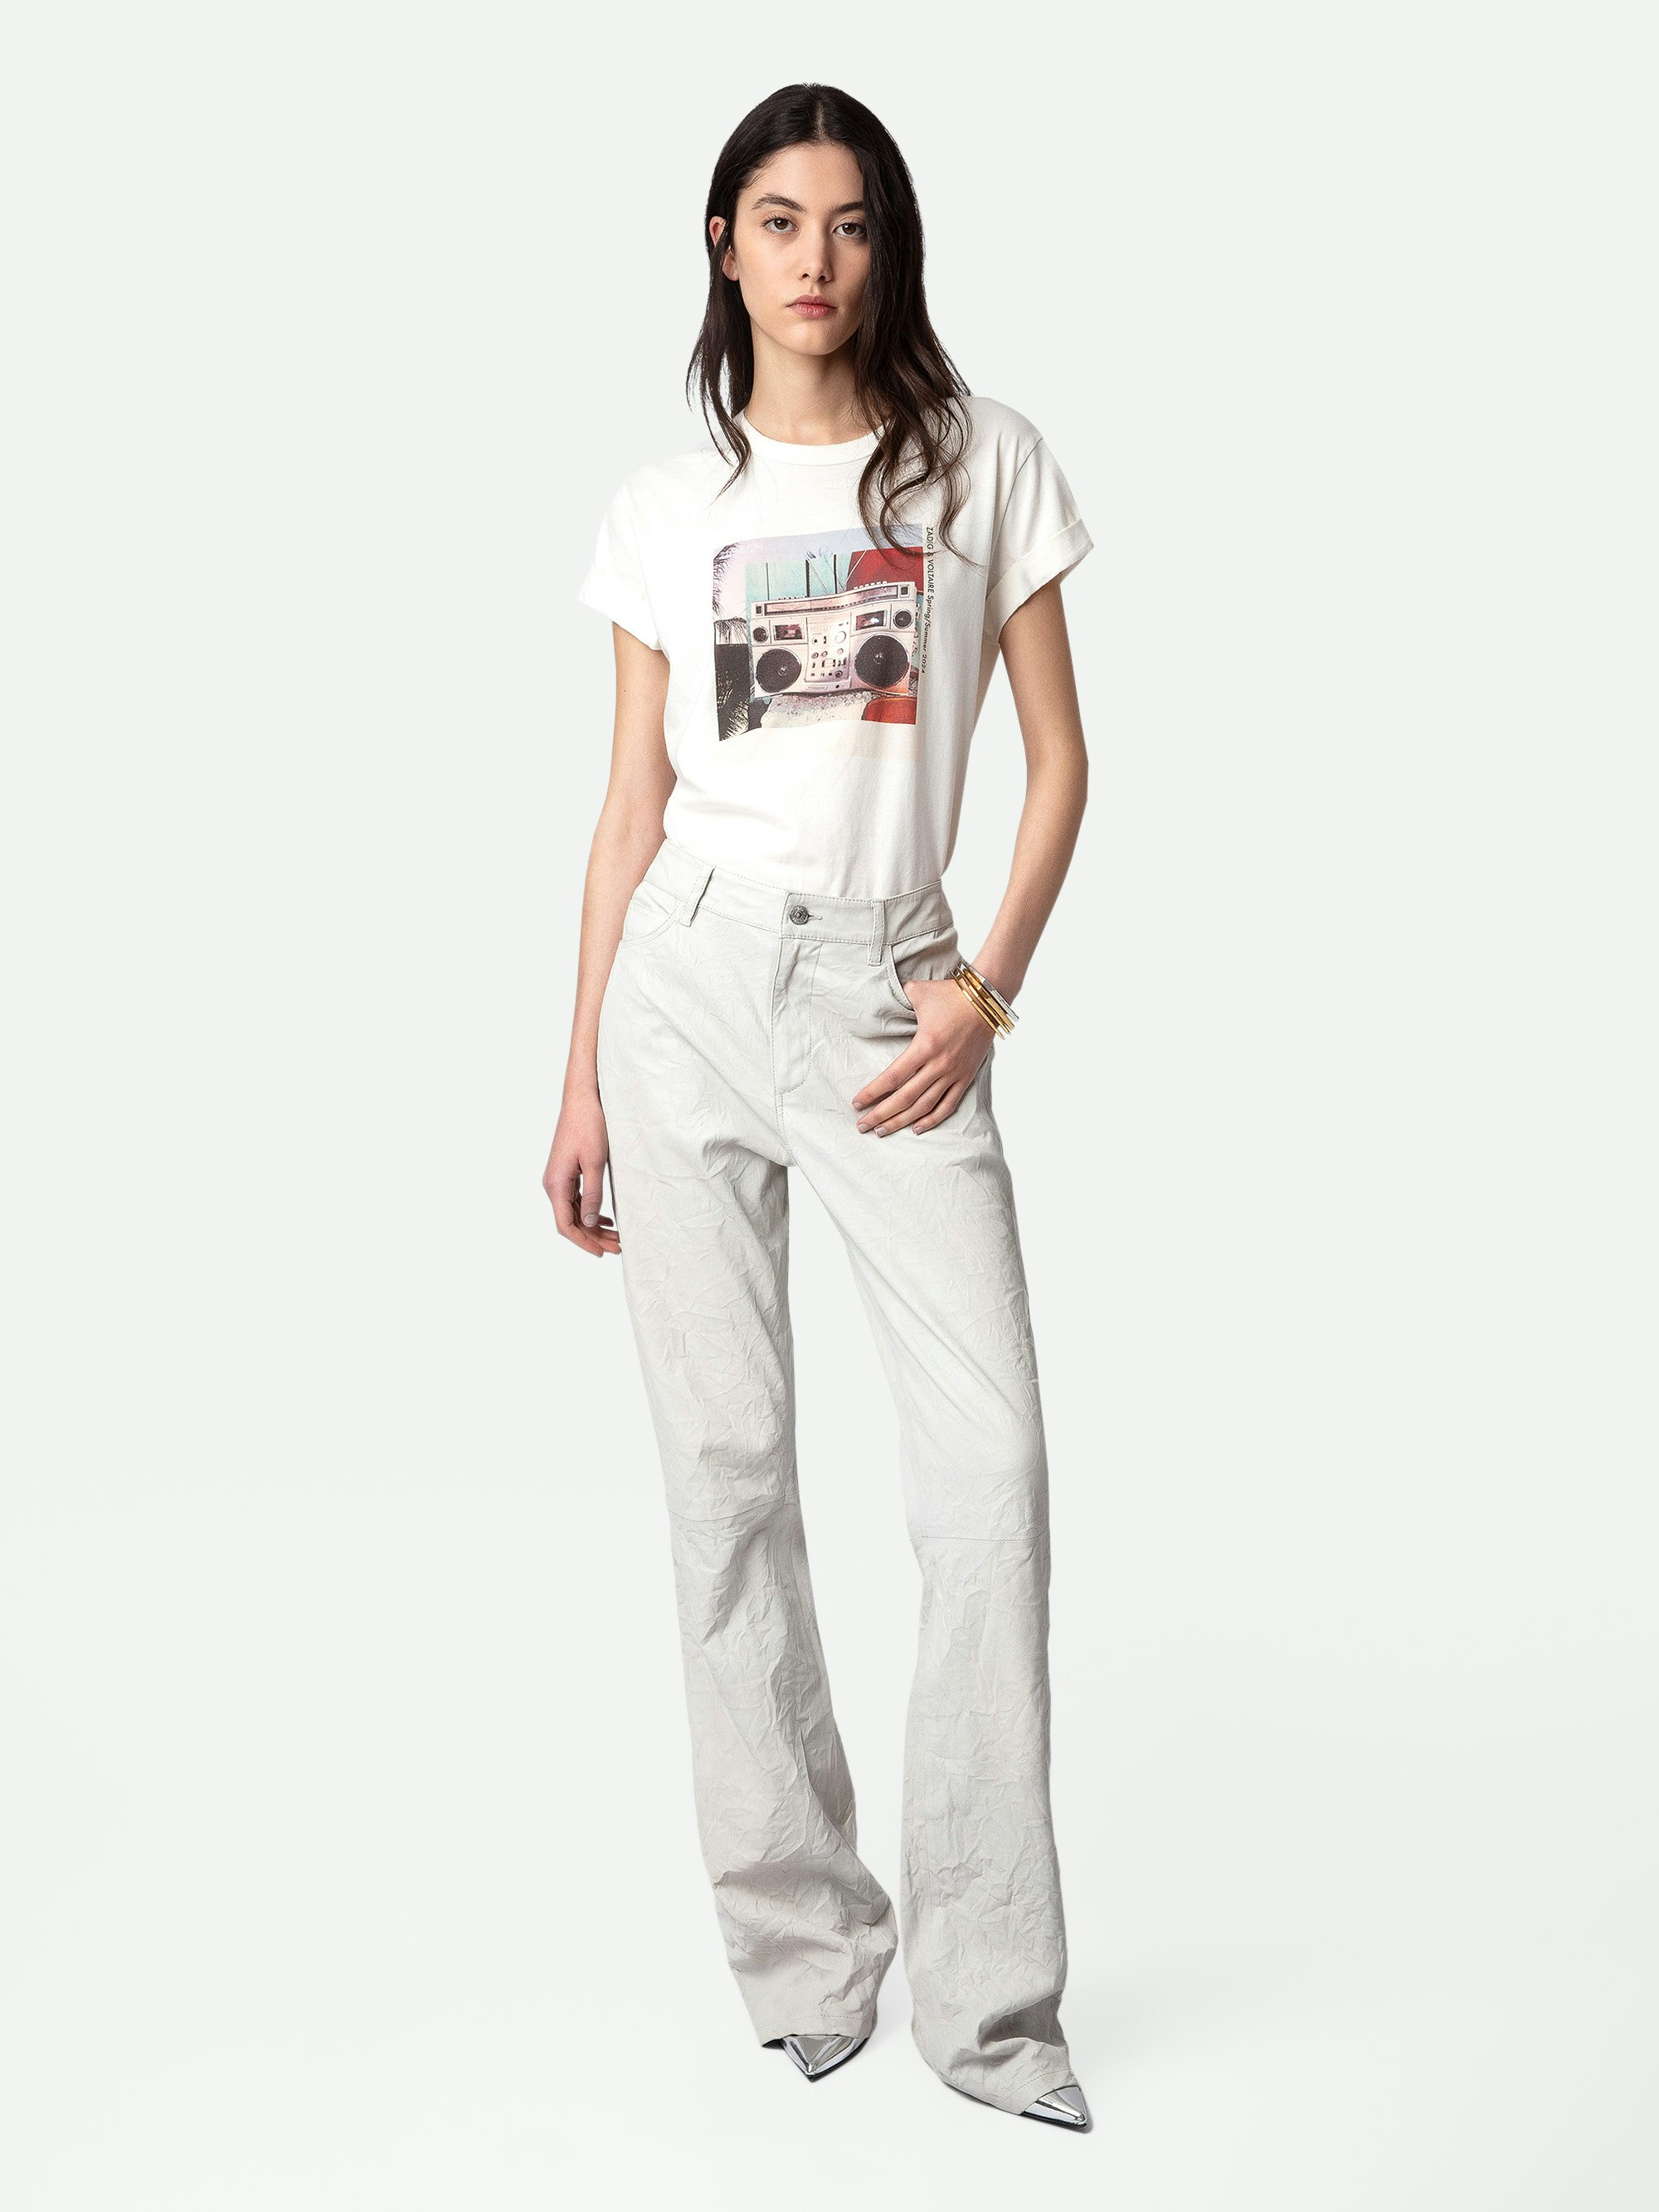 Anya Photoprint T-shirt - White cotton short-sleeved T-shirt with Ghetto Blaster photoprint.